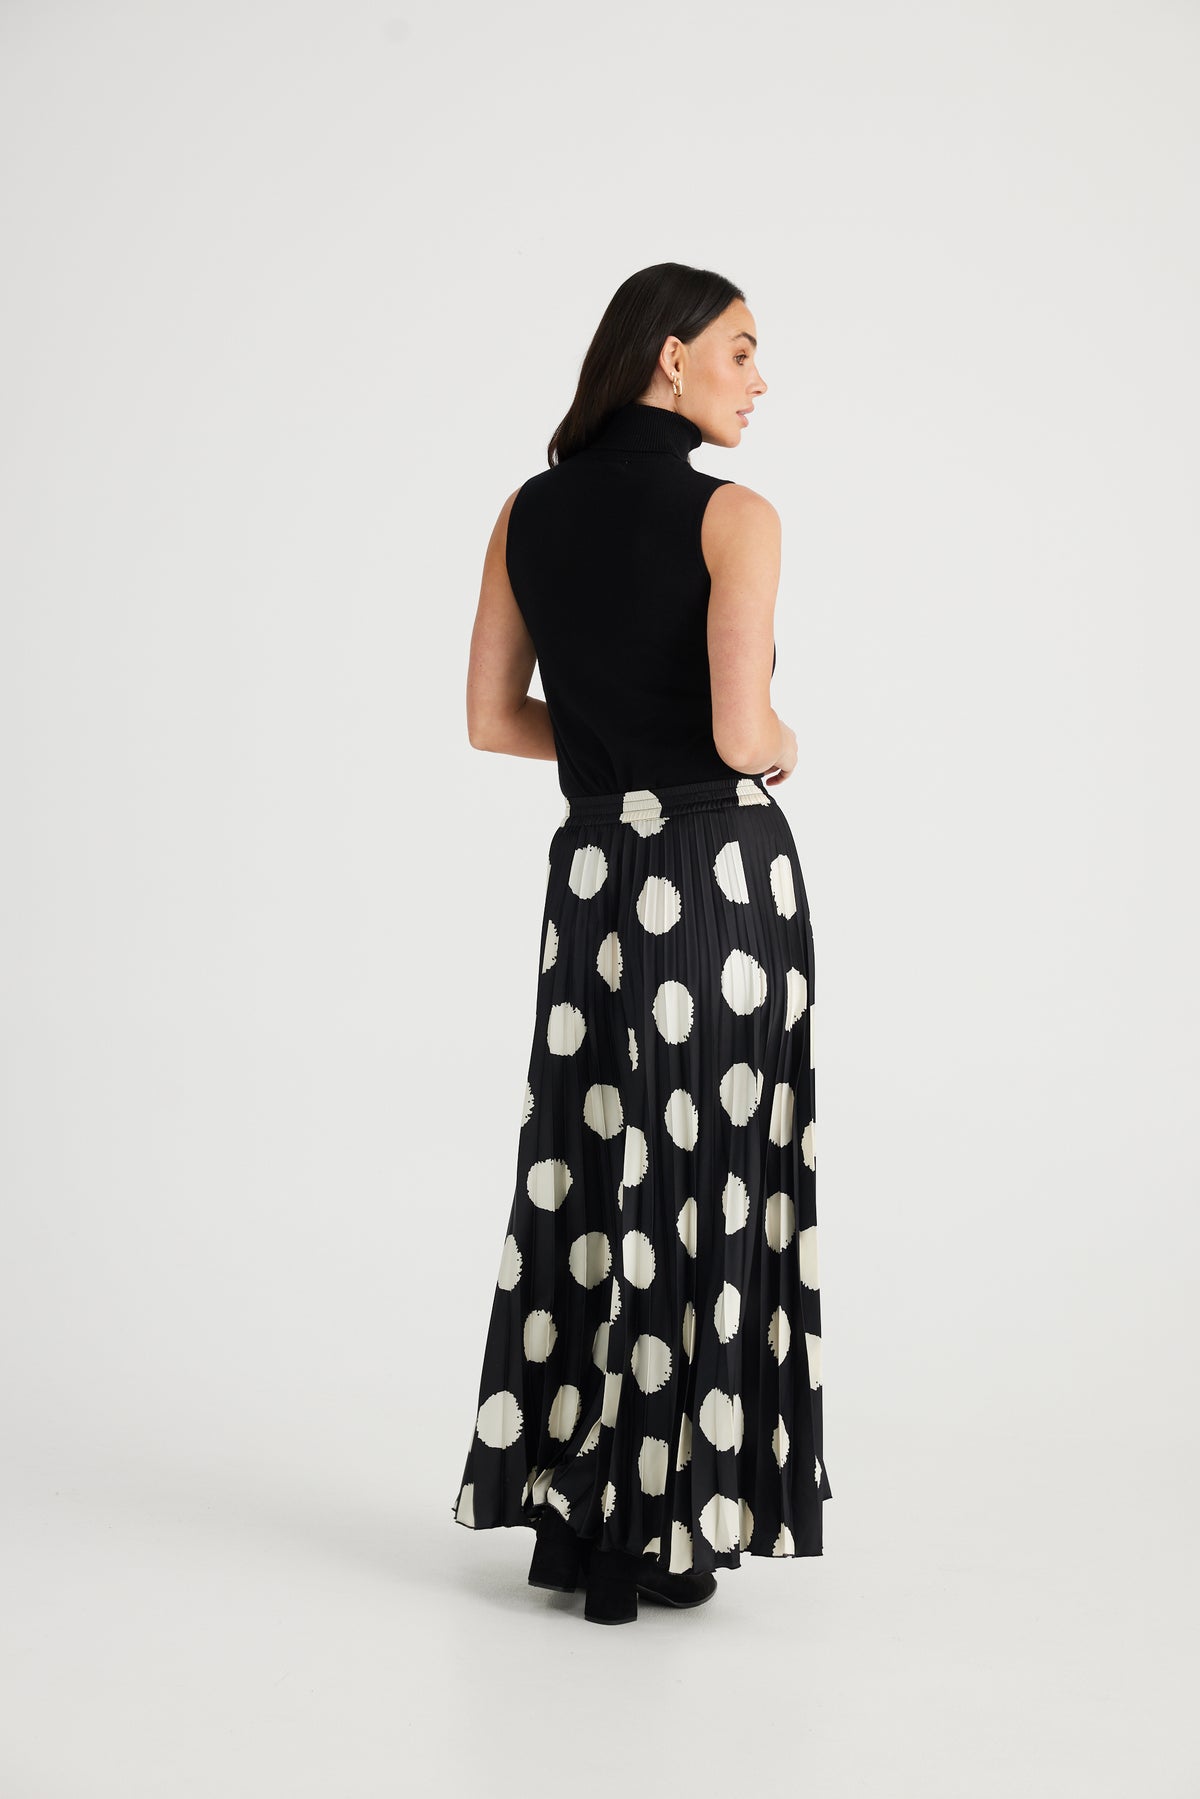 Alias Pleated Skirt Black With Ivory Spot